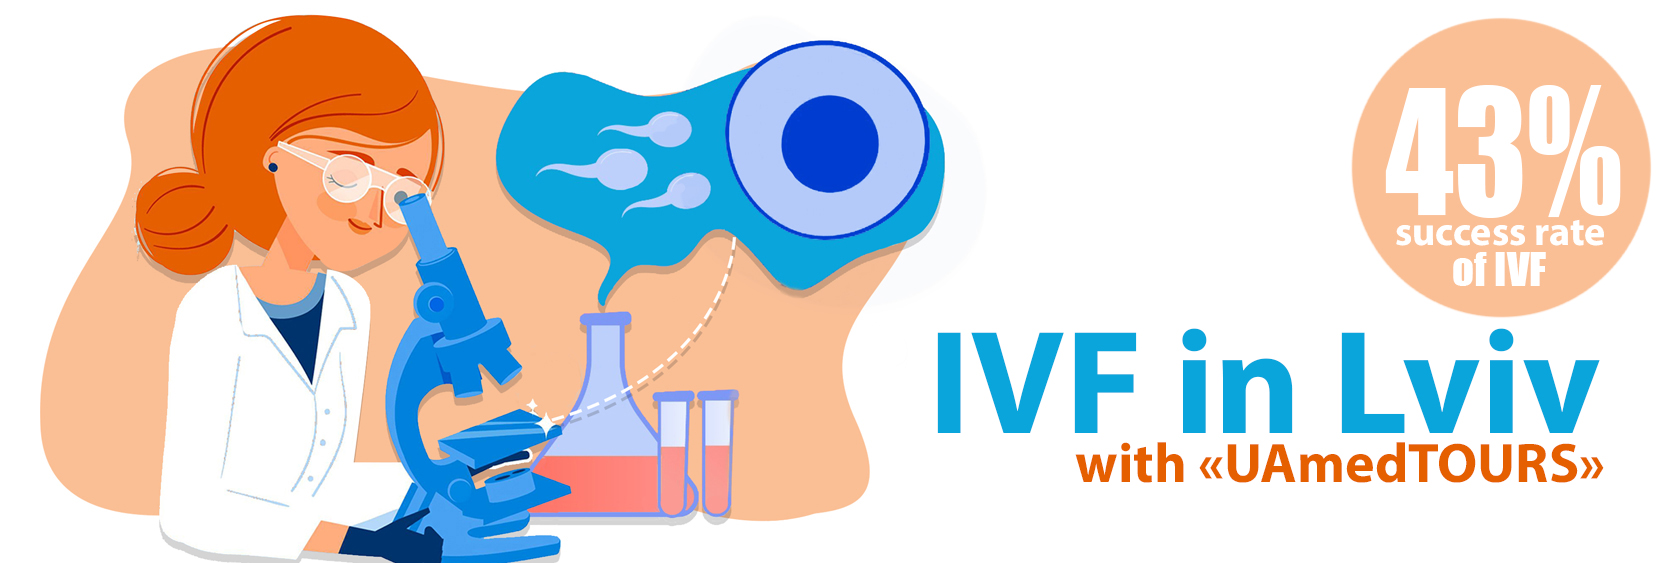 IVF success rates in Lviv